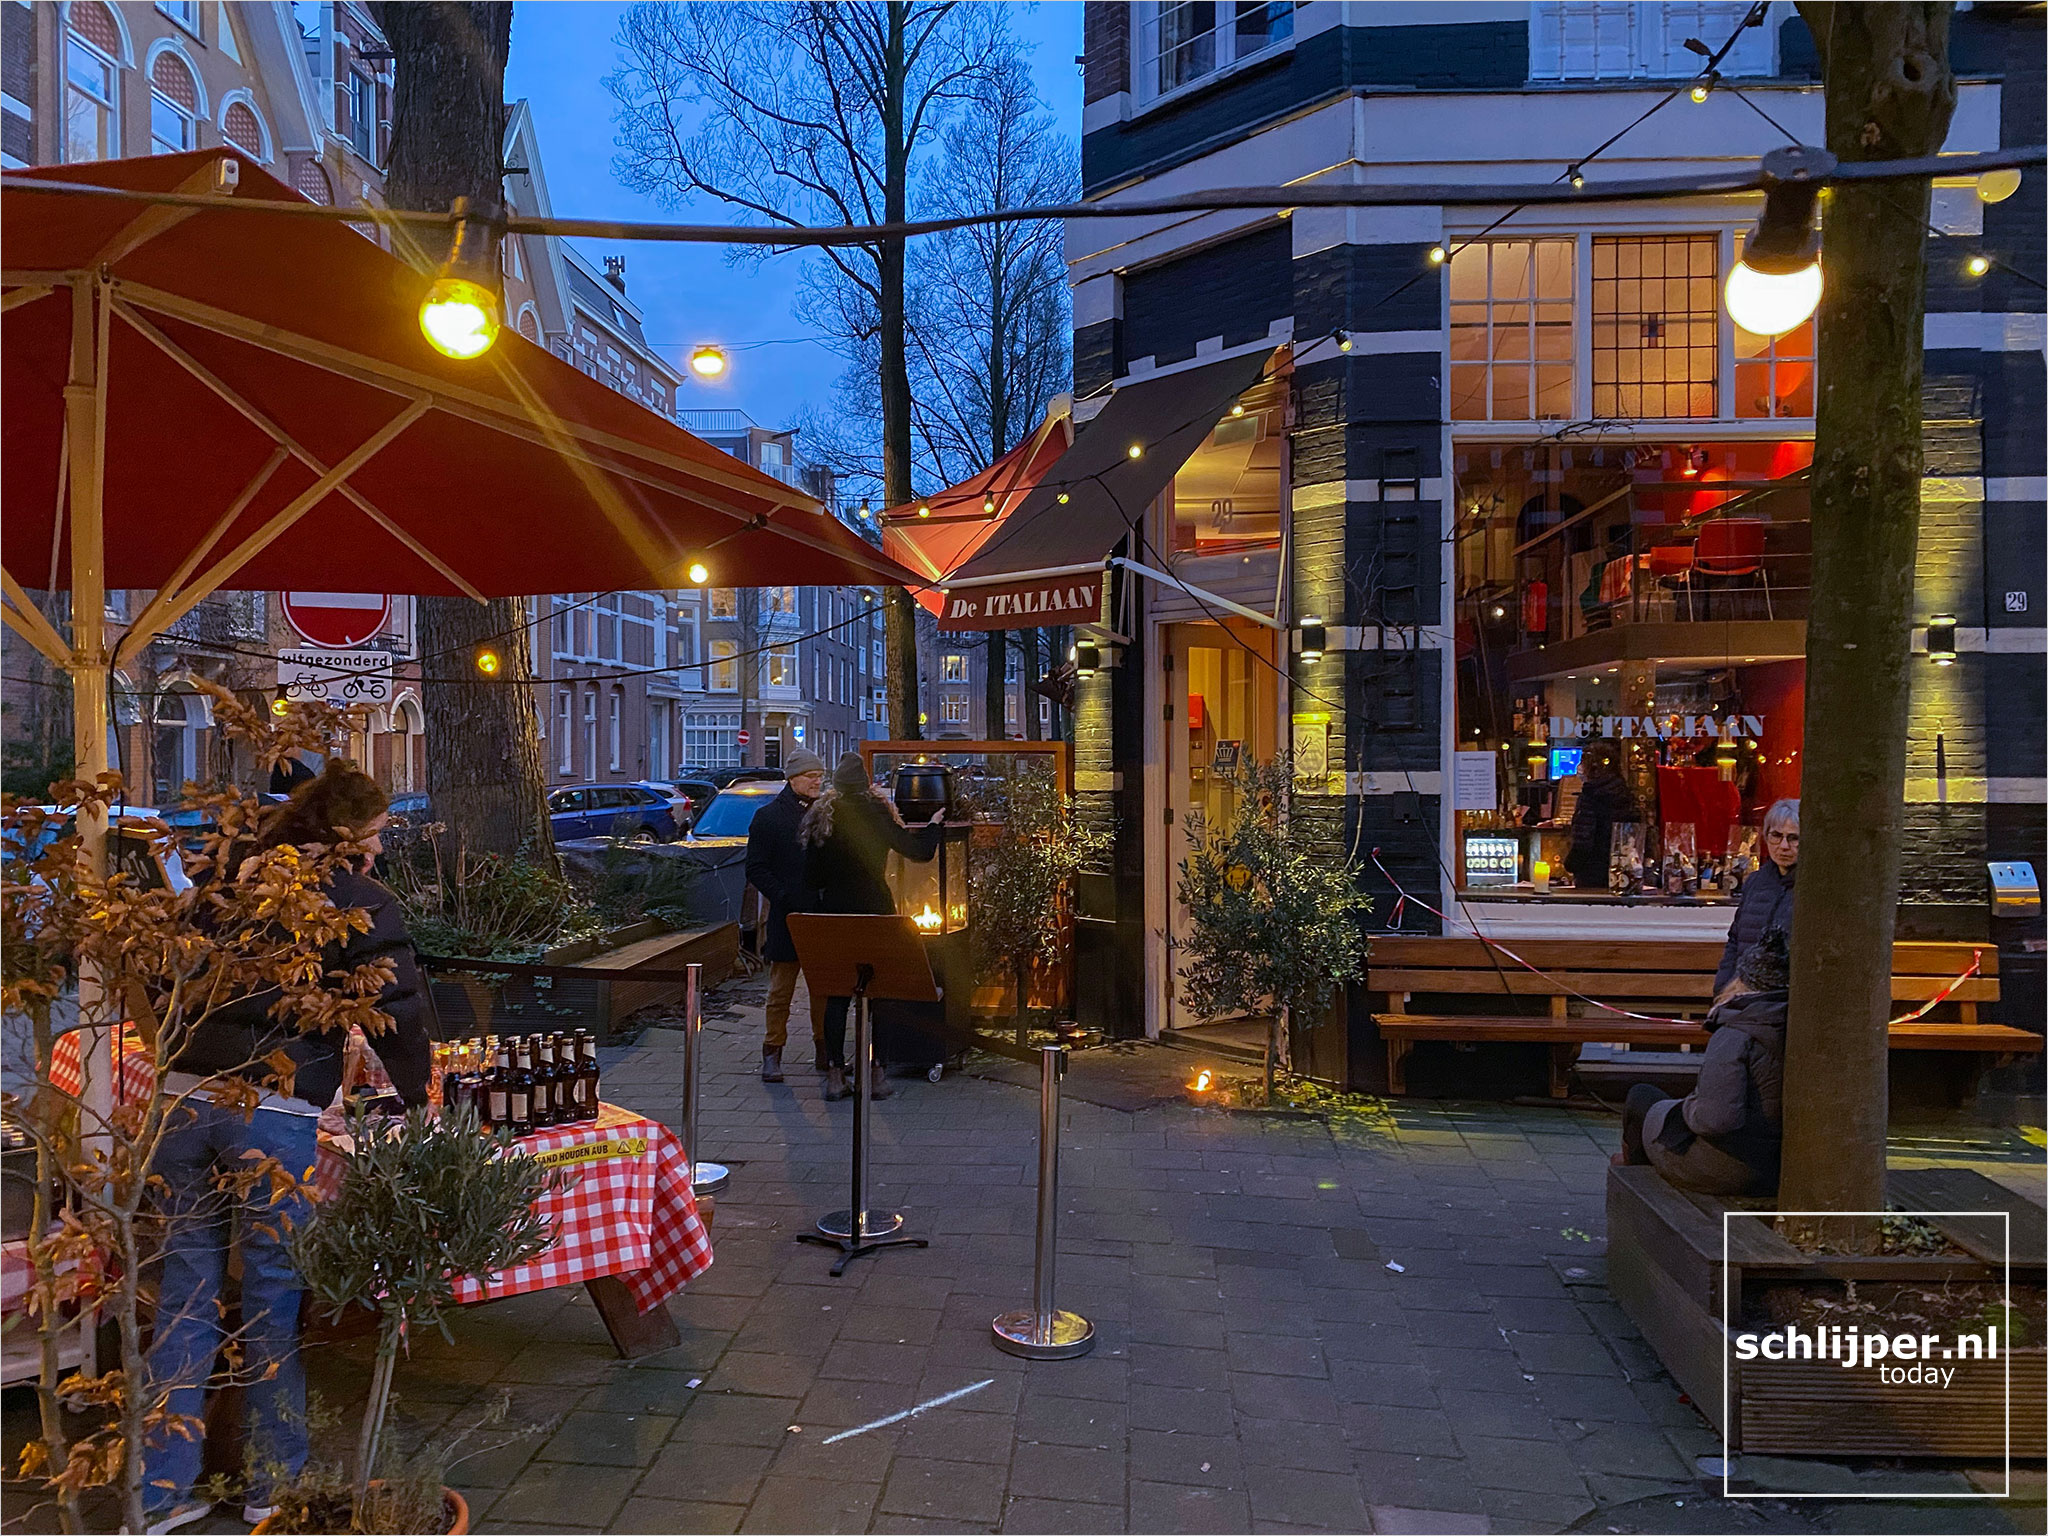 The Netherlands, Amsterdam, 31 januari 2021